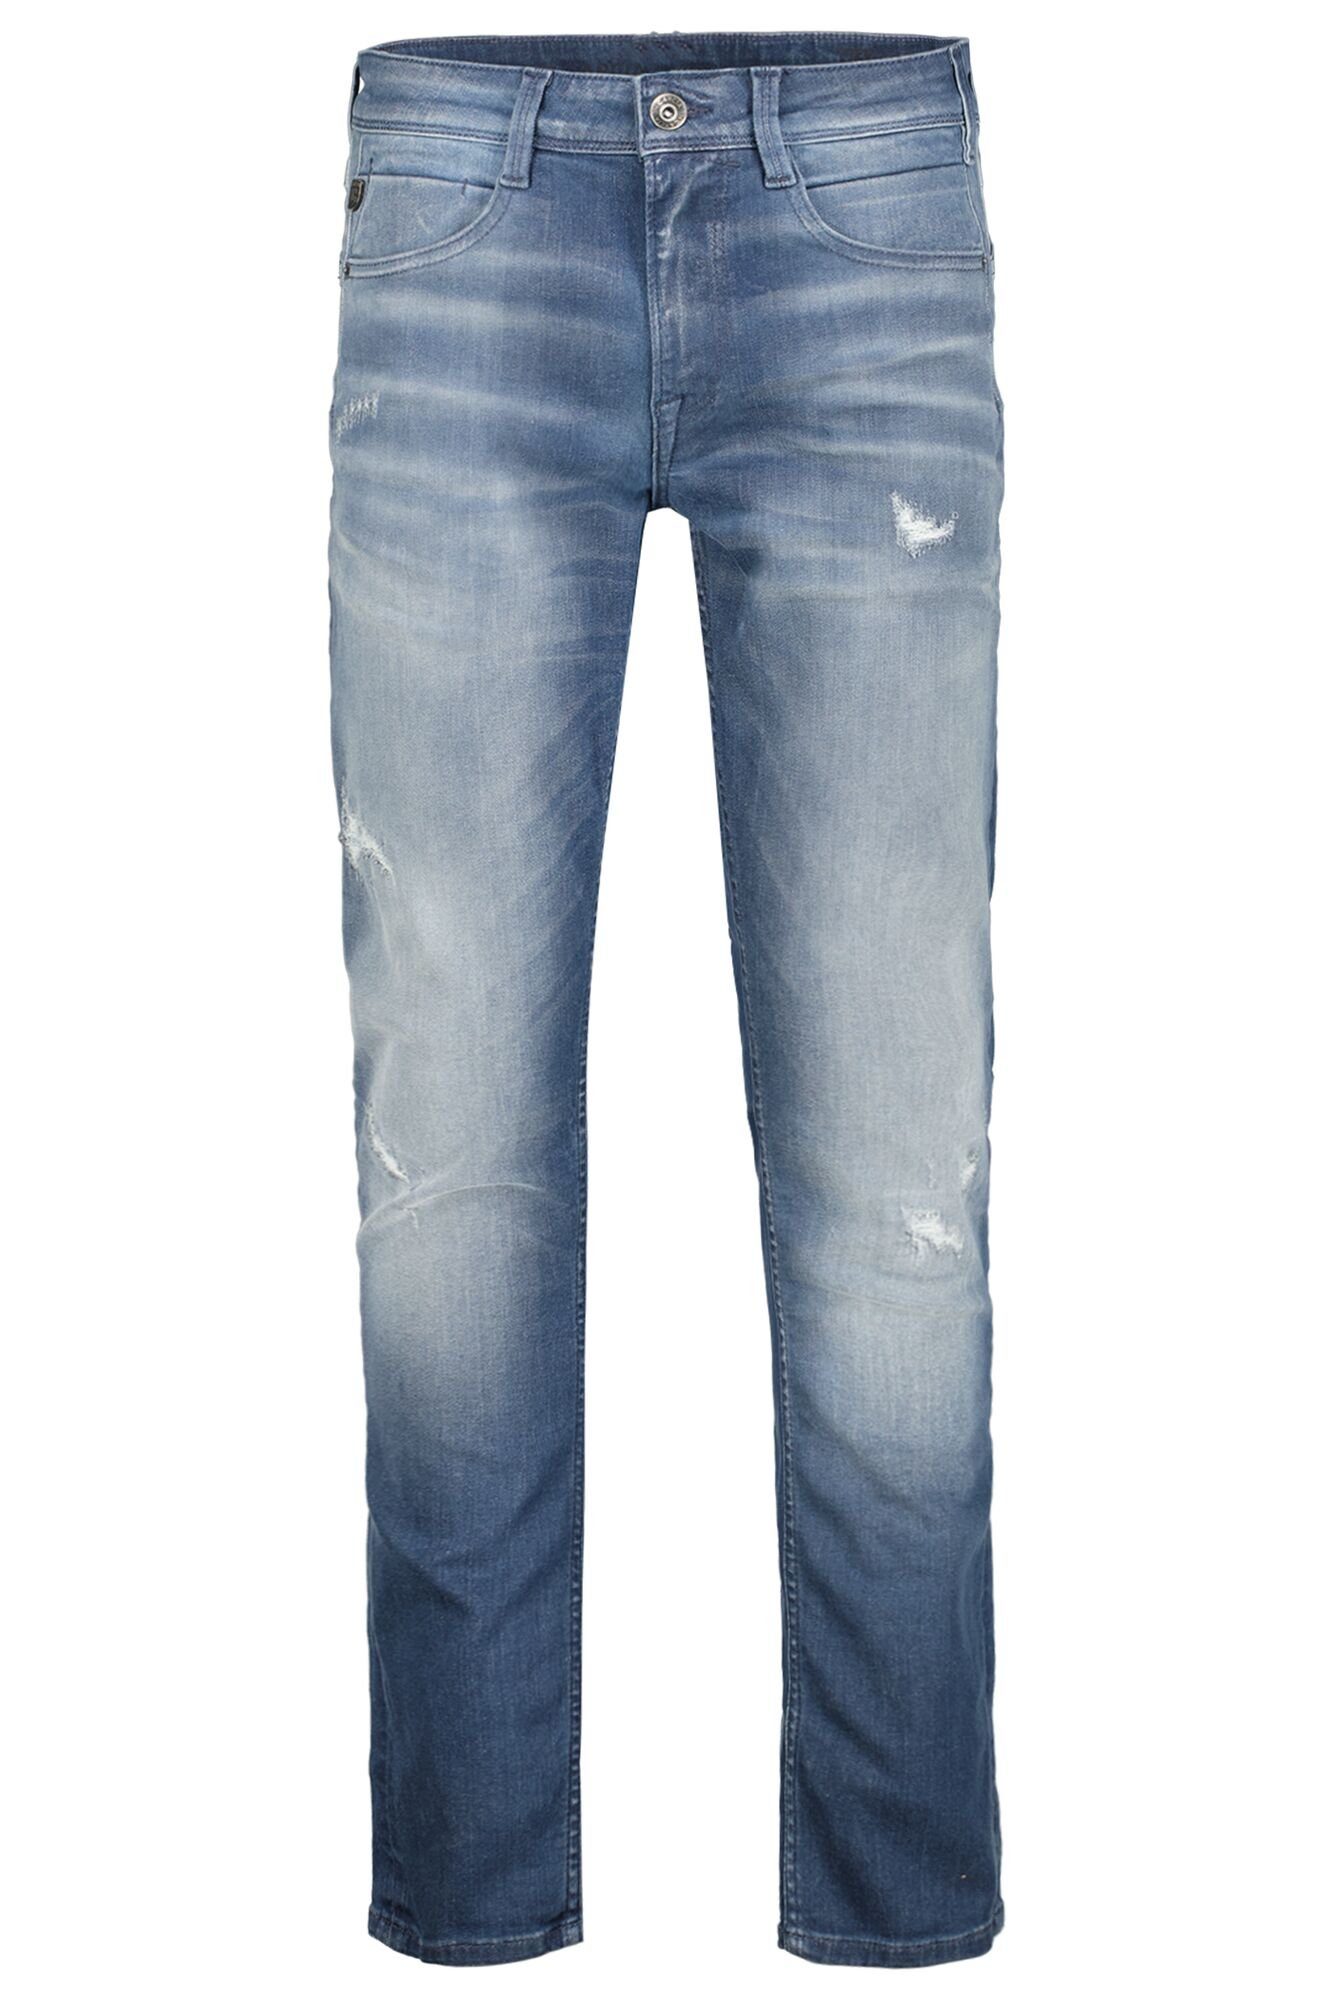 vinatge 5-Pocket-Jeans Garcia used Rocko in Waschungen dark verschiedenen